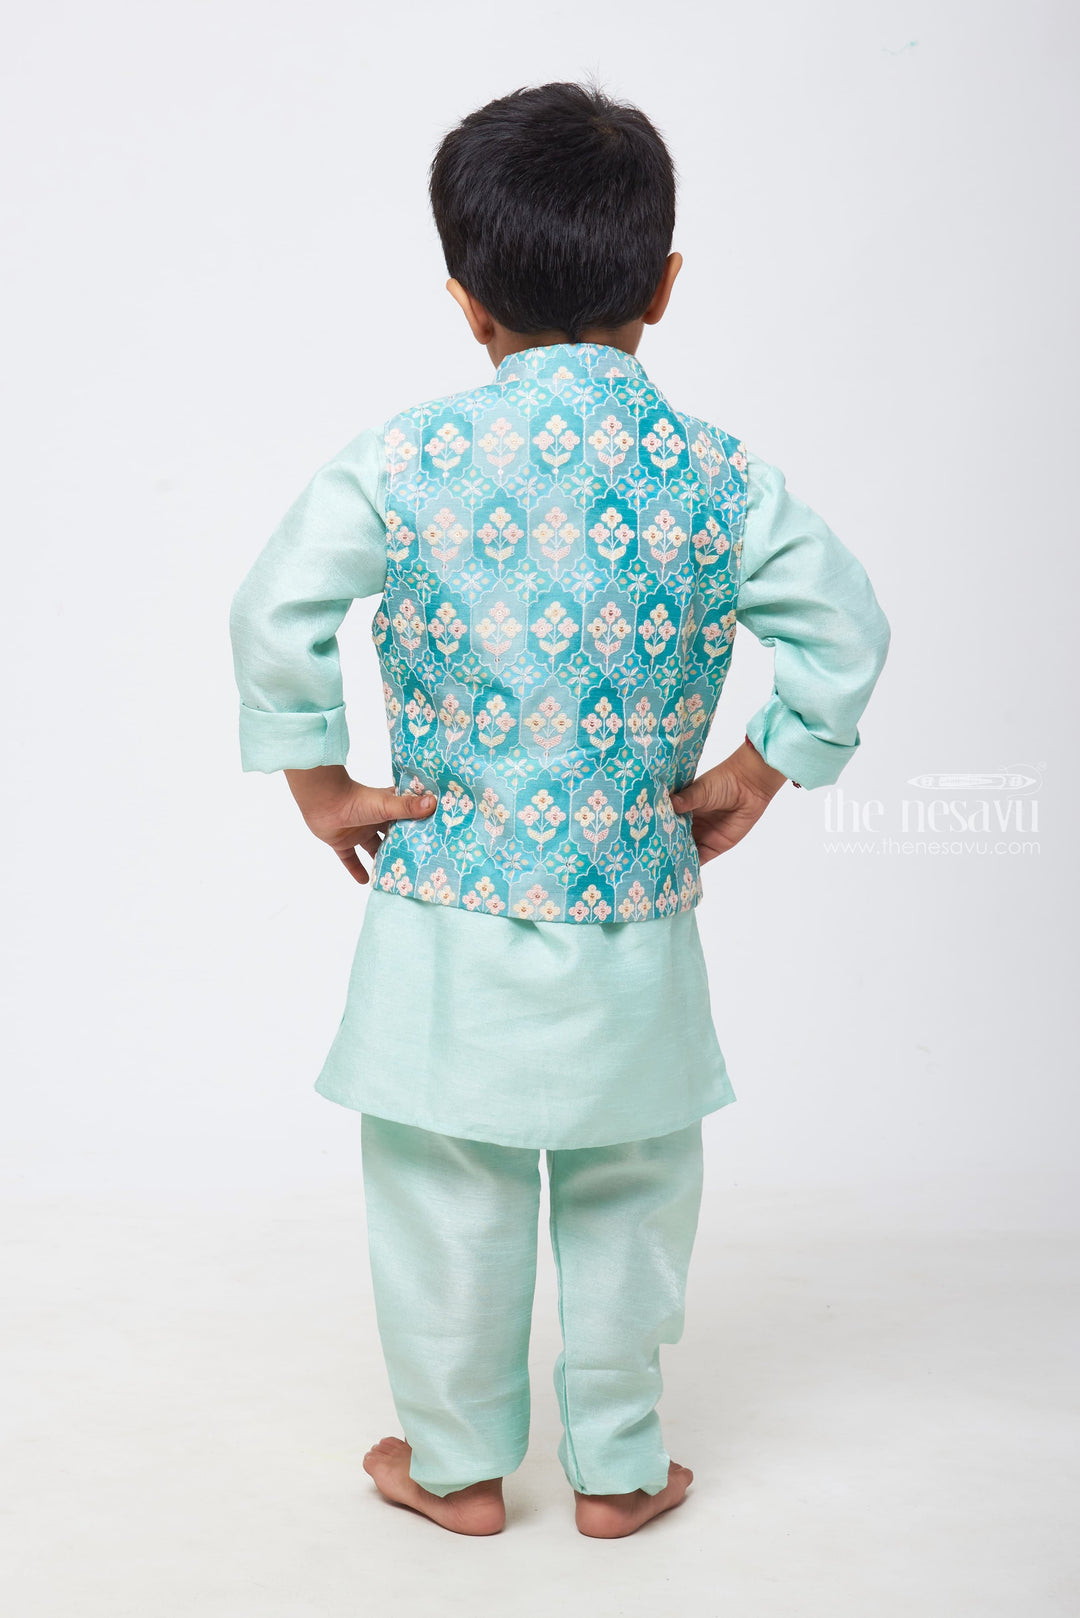 The Nesavu Boys Jacket Sets Celestial Blossom: Boys Embroidered Blue Kurta Set with Delicate Floral Patterns Nesavu Boys Kurta & Pant with Jacket | Blend of Tradition & Contemporary Style | The Nesavu